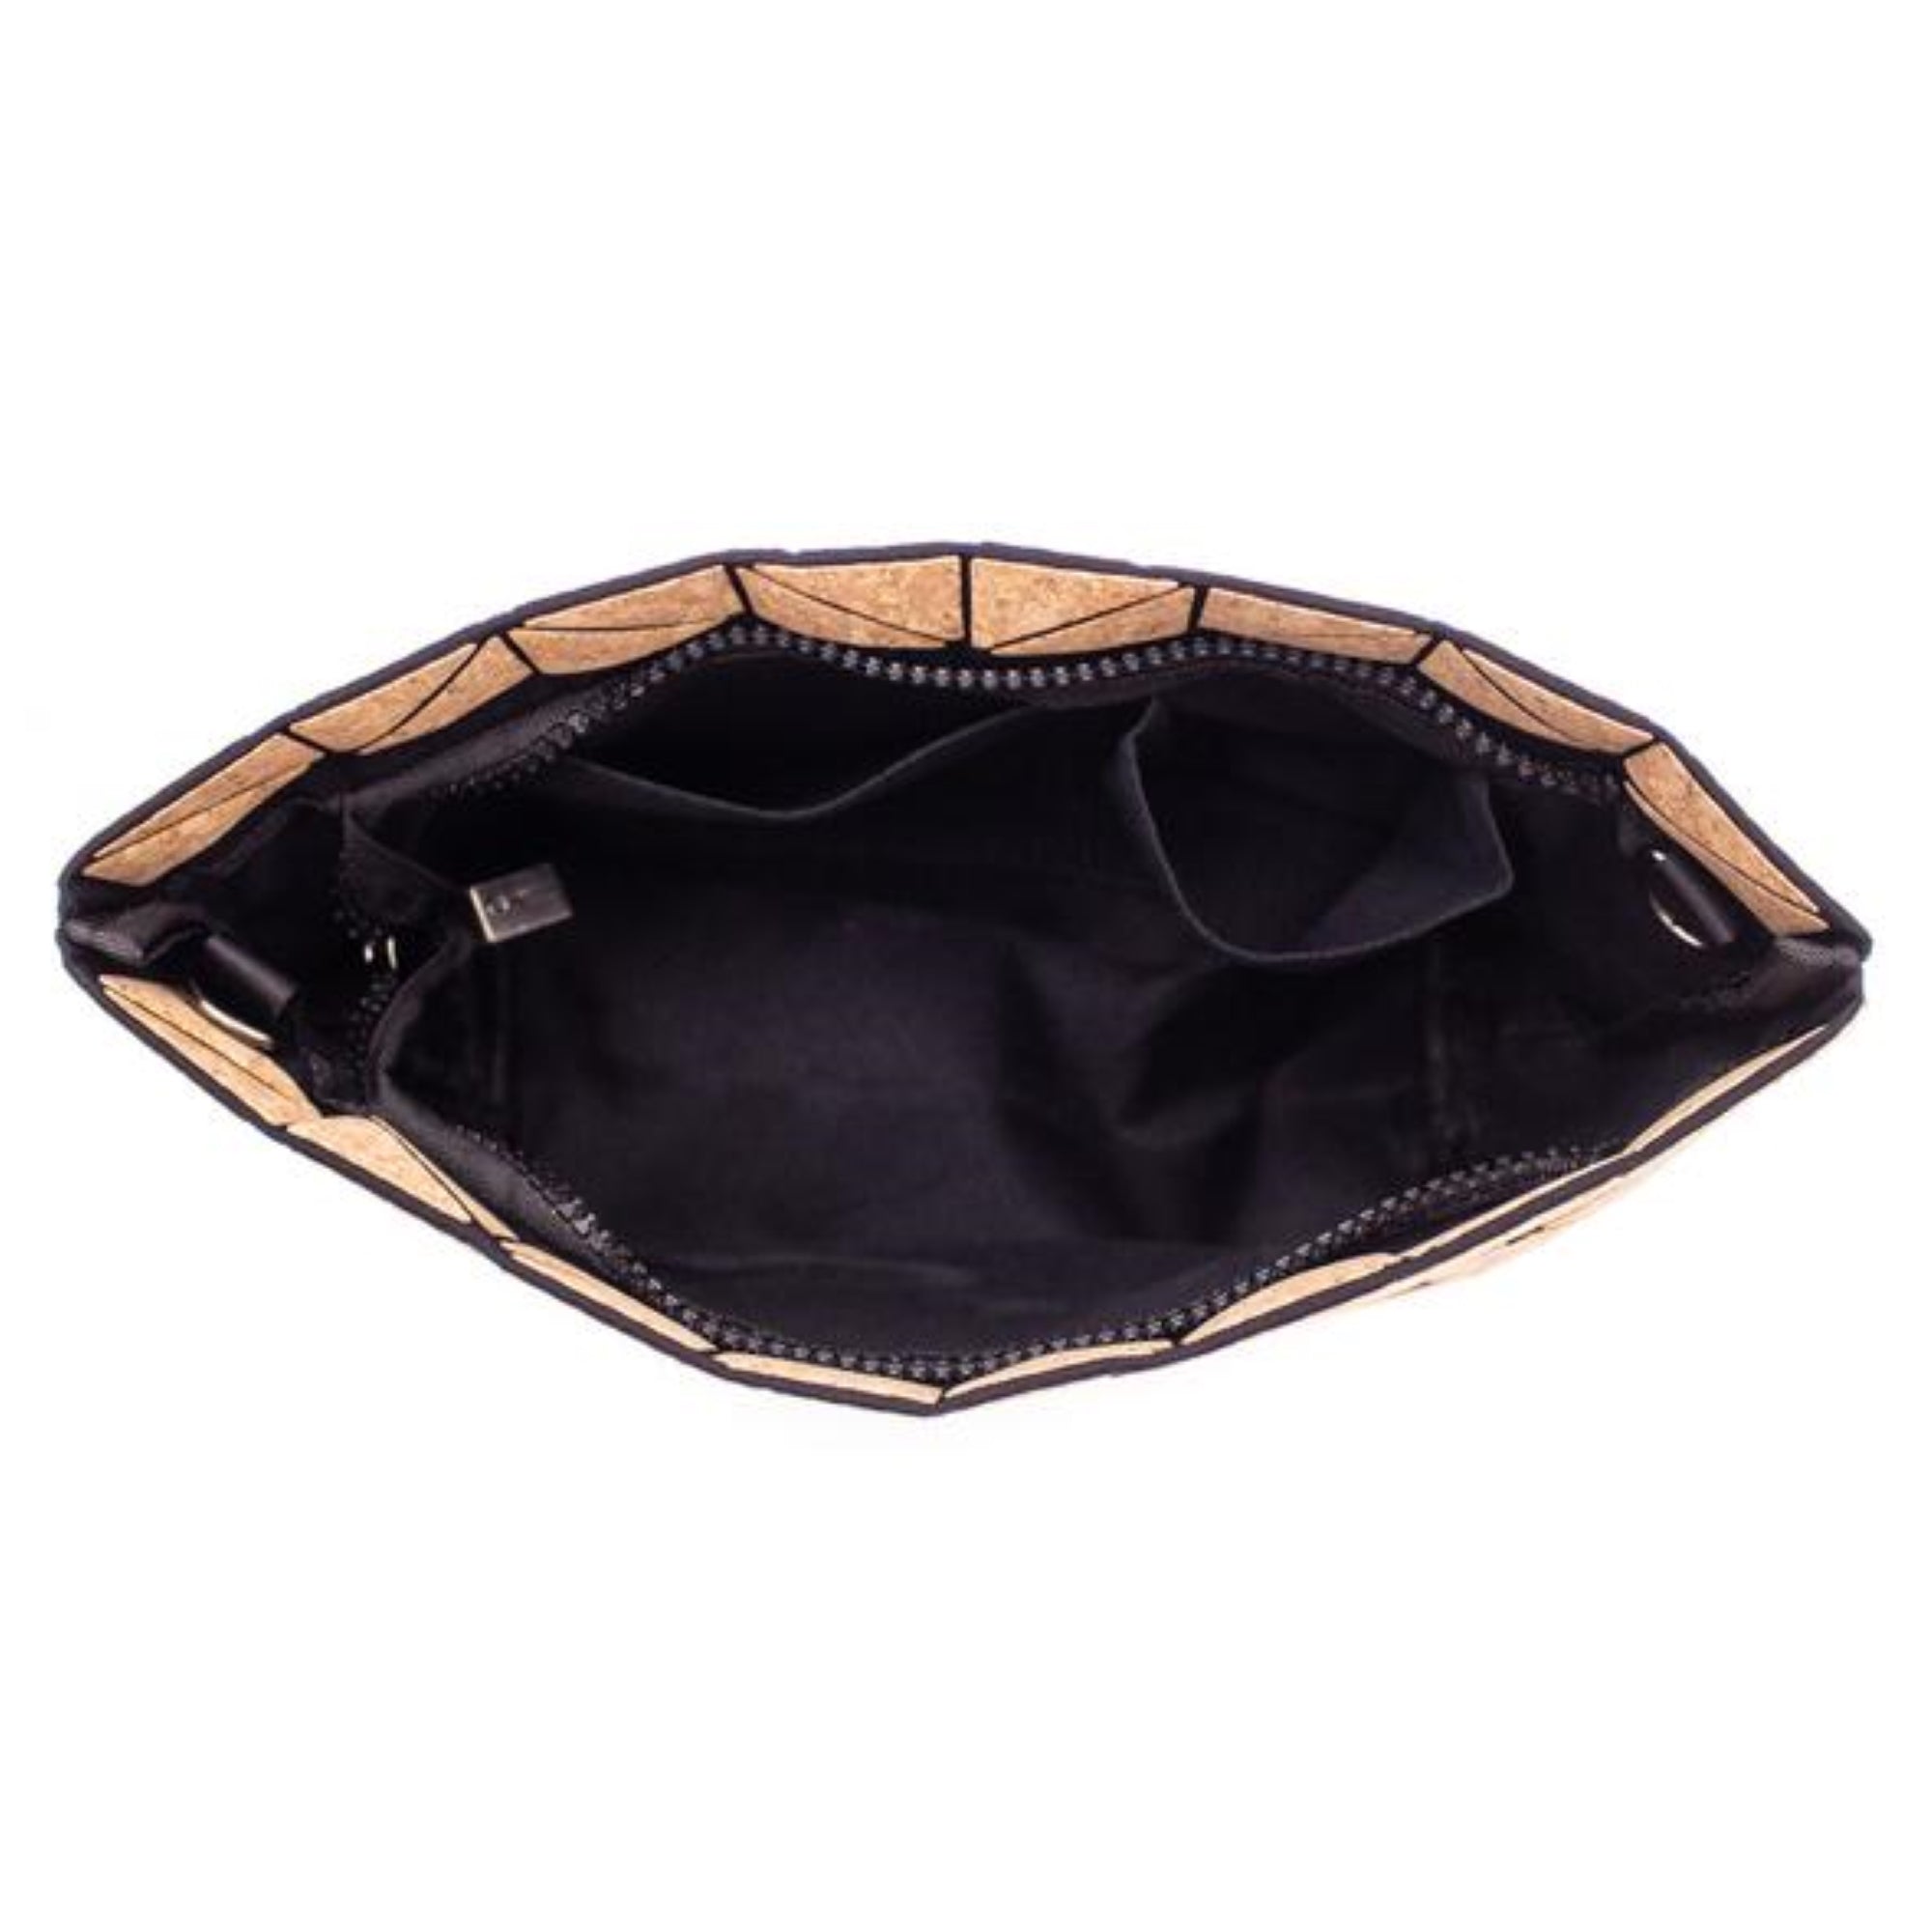 Geometric Cork Shoulder Bag with chain strap – Cork Culture US